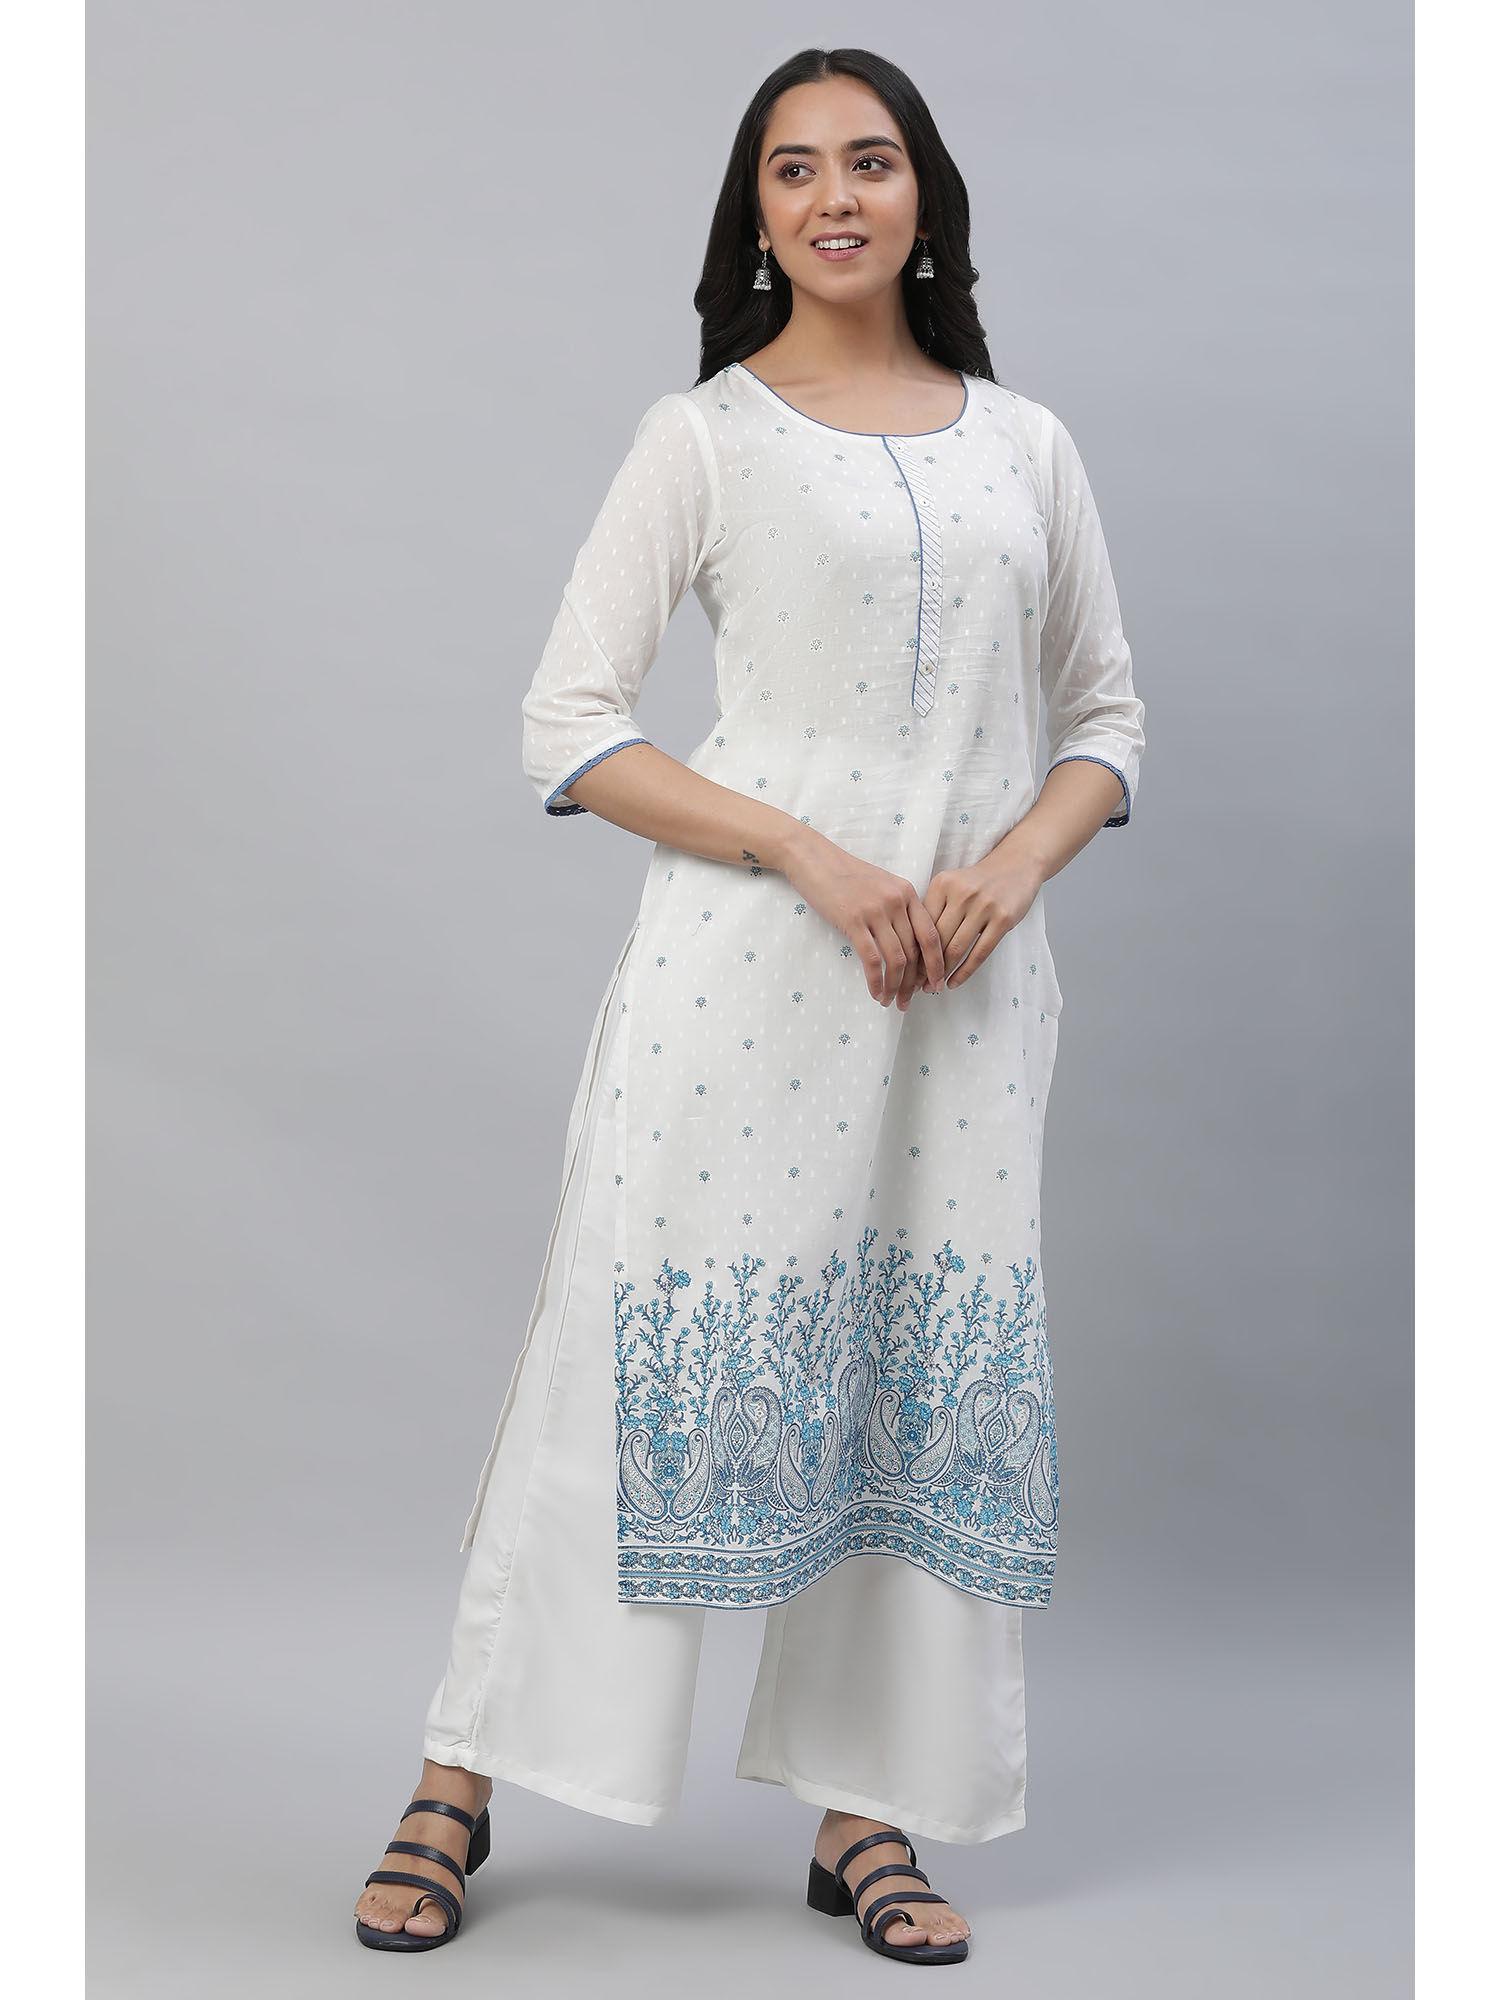 white straight kurta in blue floral print